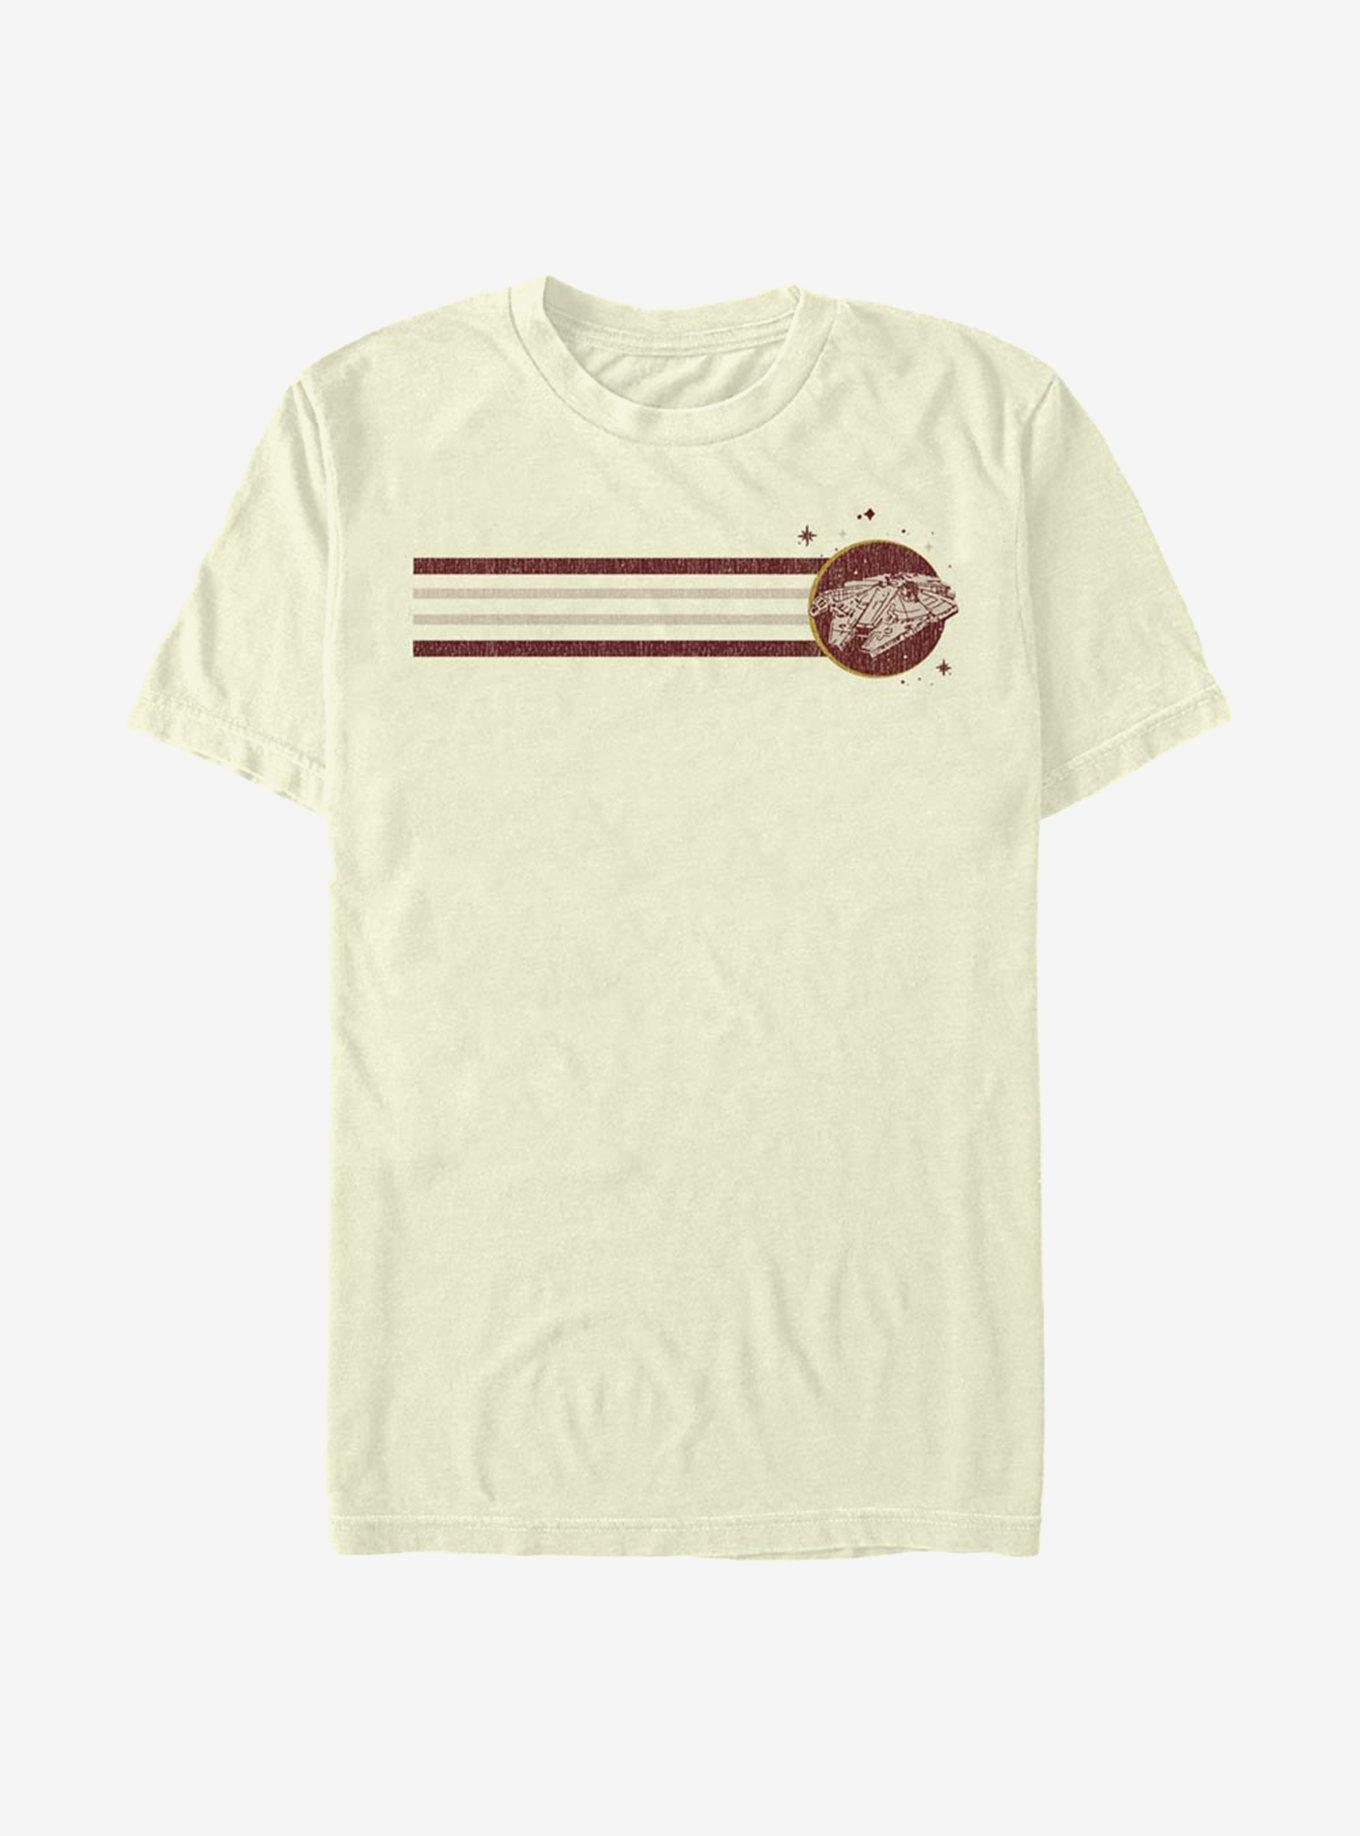 Star Wars Flight Of Falcon T-Shirt